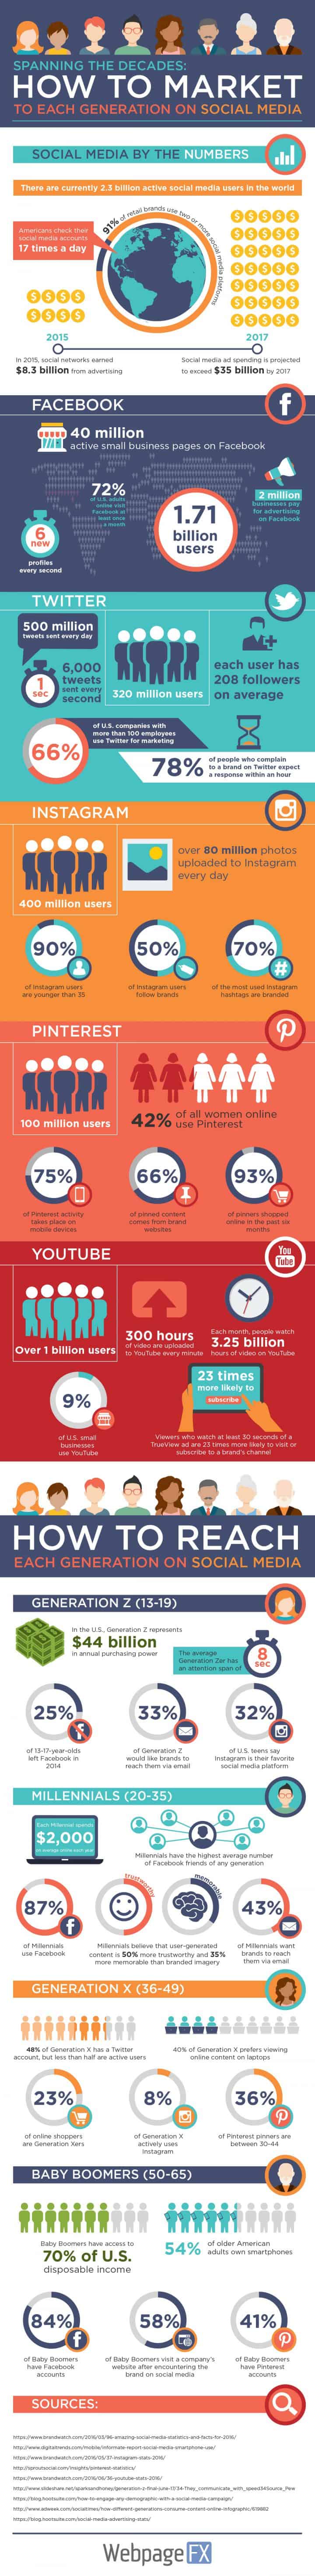 social-media-generation-infographic